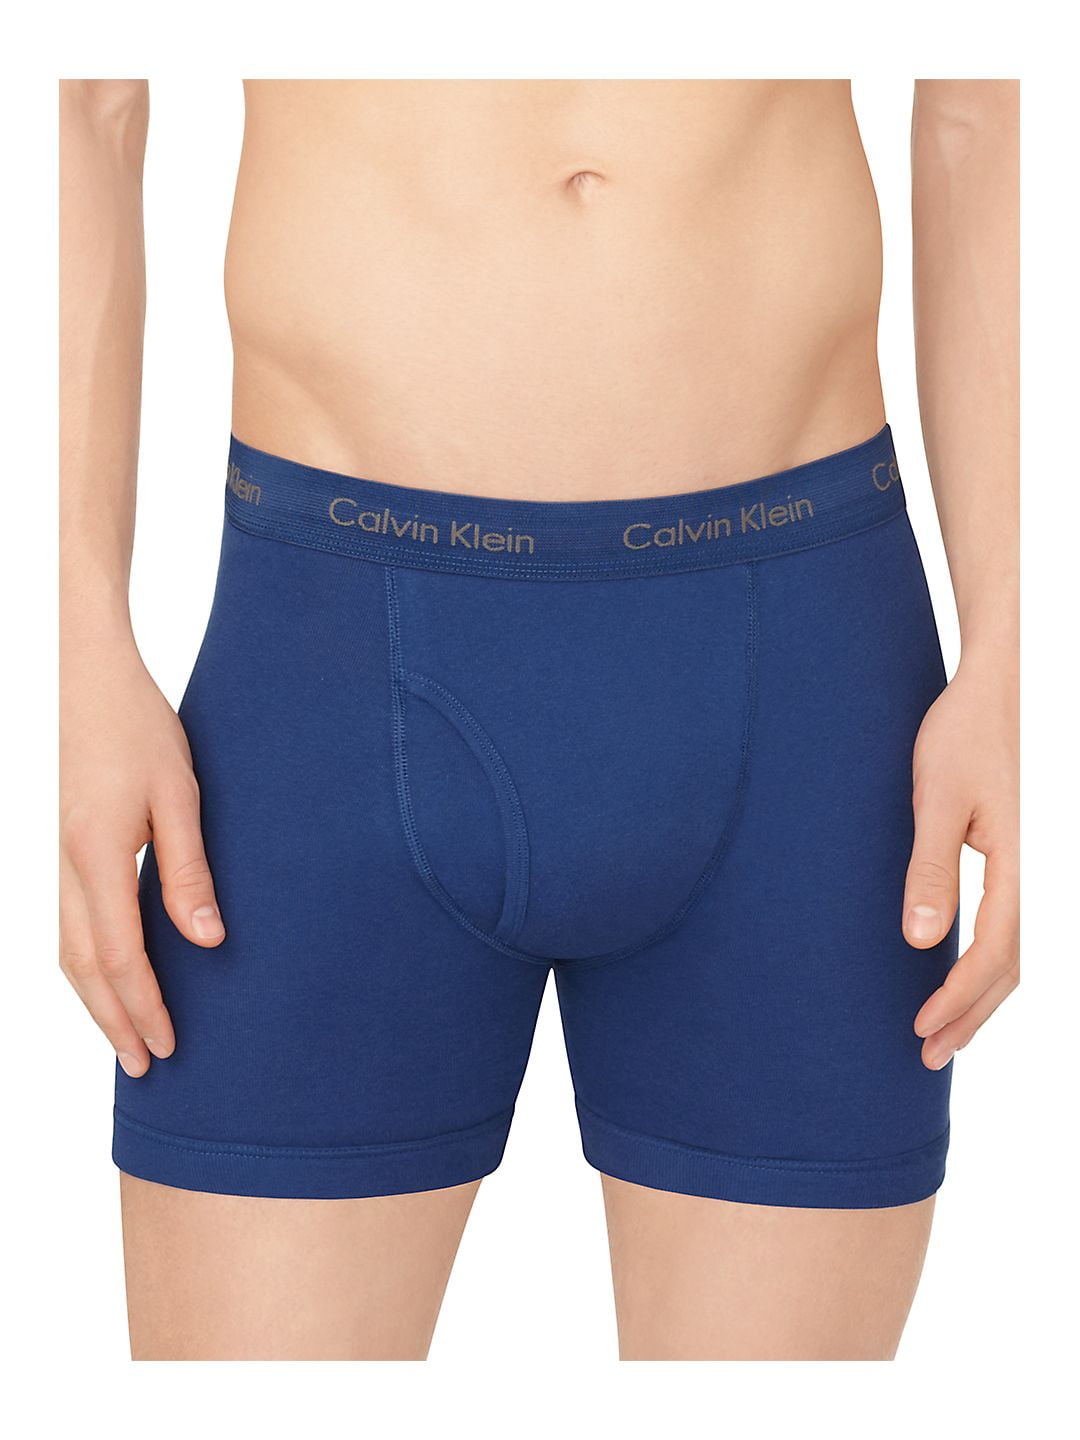 Calvin Klein Men's Cotton Classic Boxer Brief (3-Pack) 